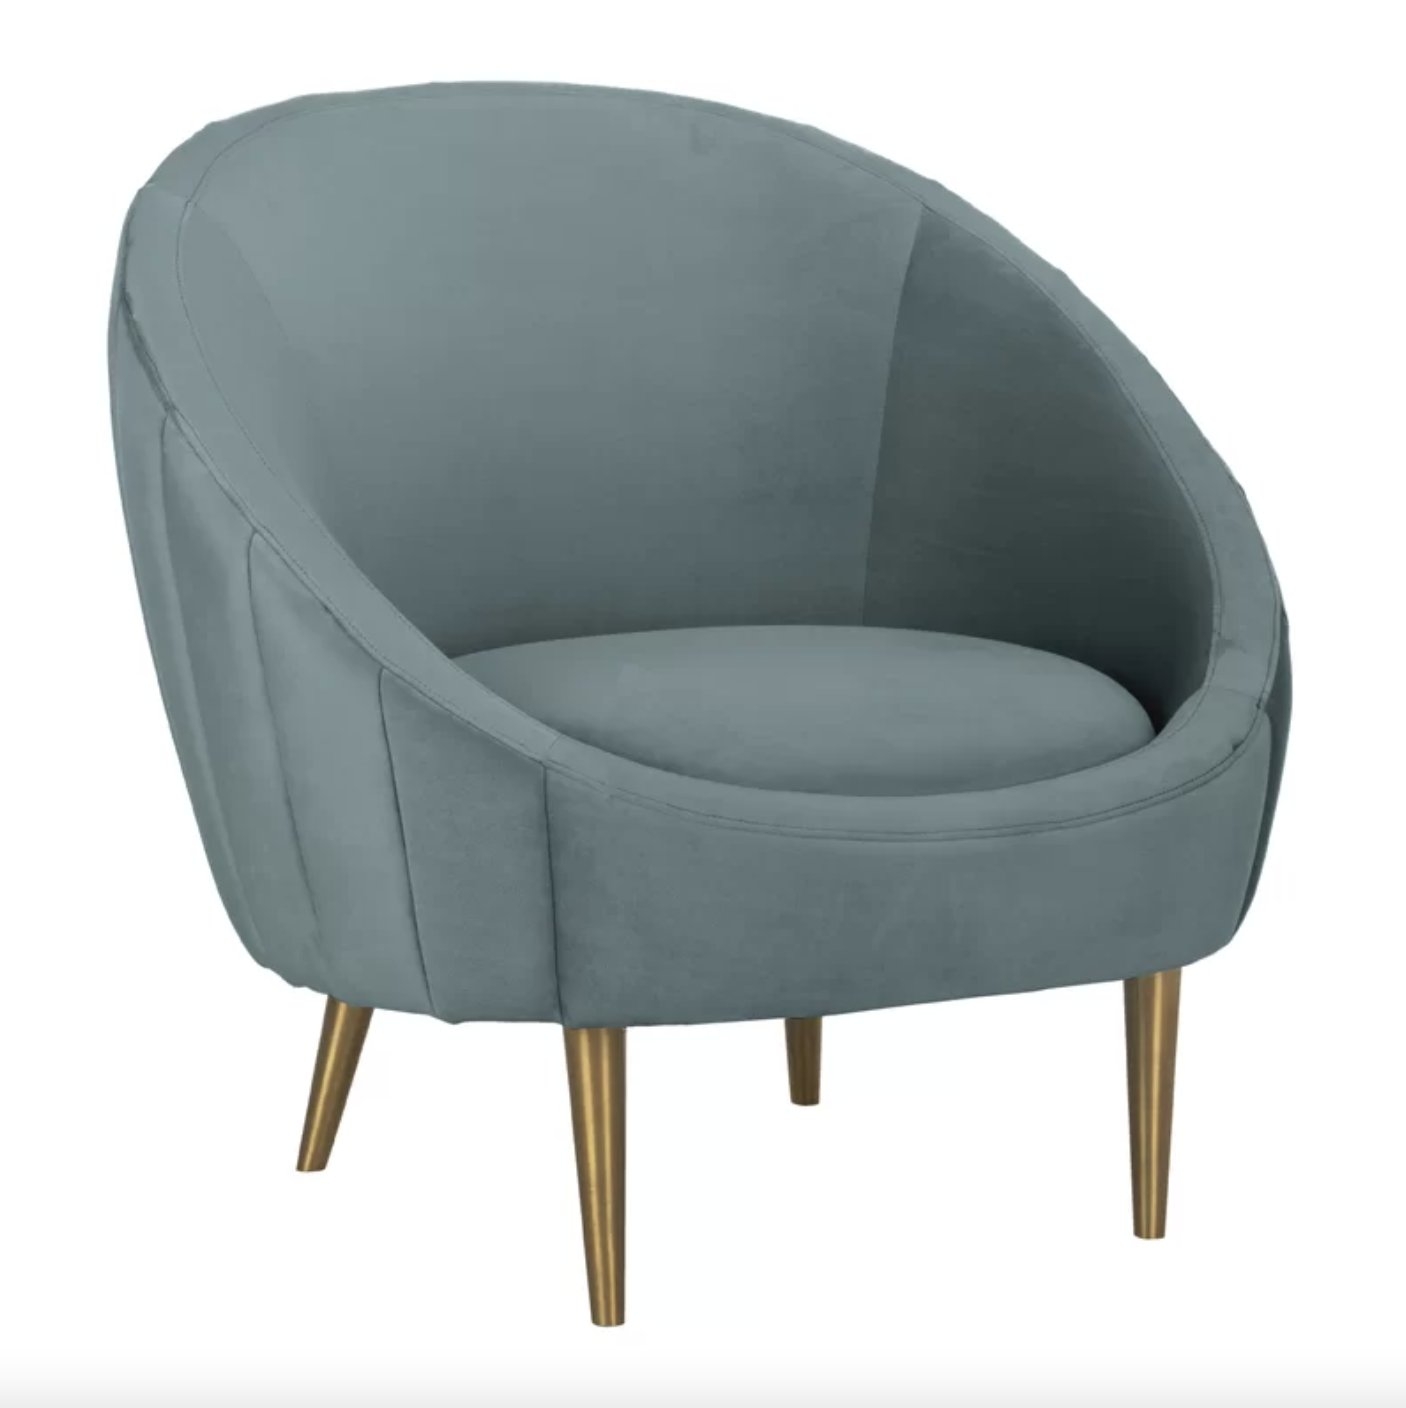 Safavieh Couture Razia Tufted Barrel Chair Upholstery: Seafoam - Image 0